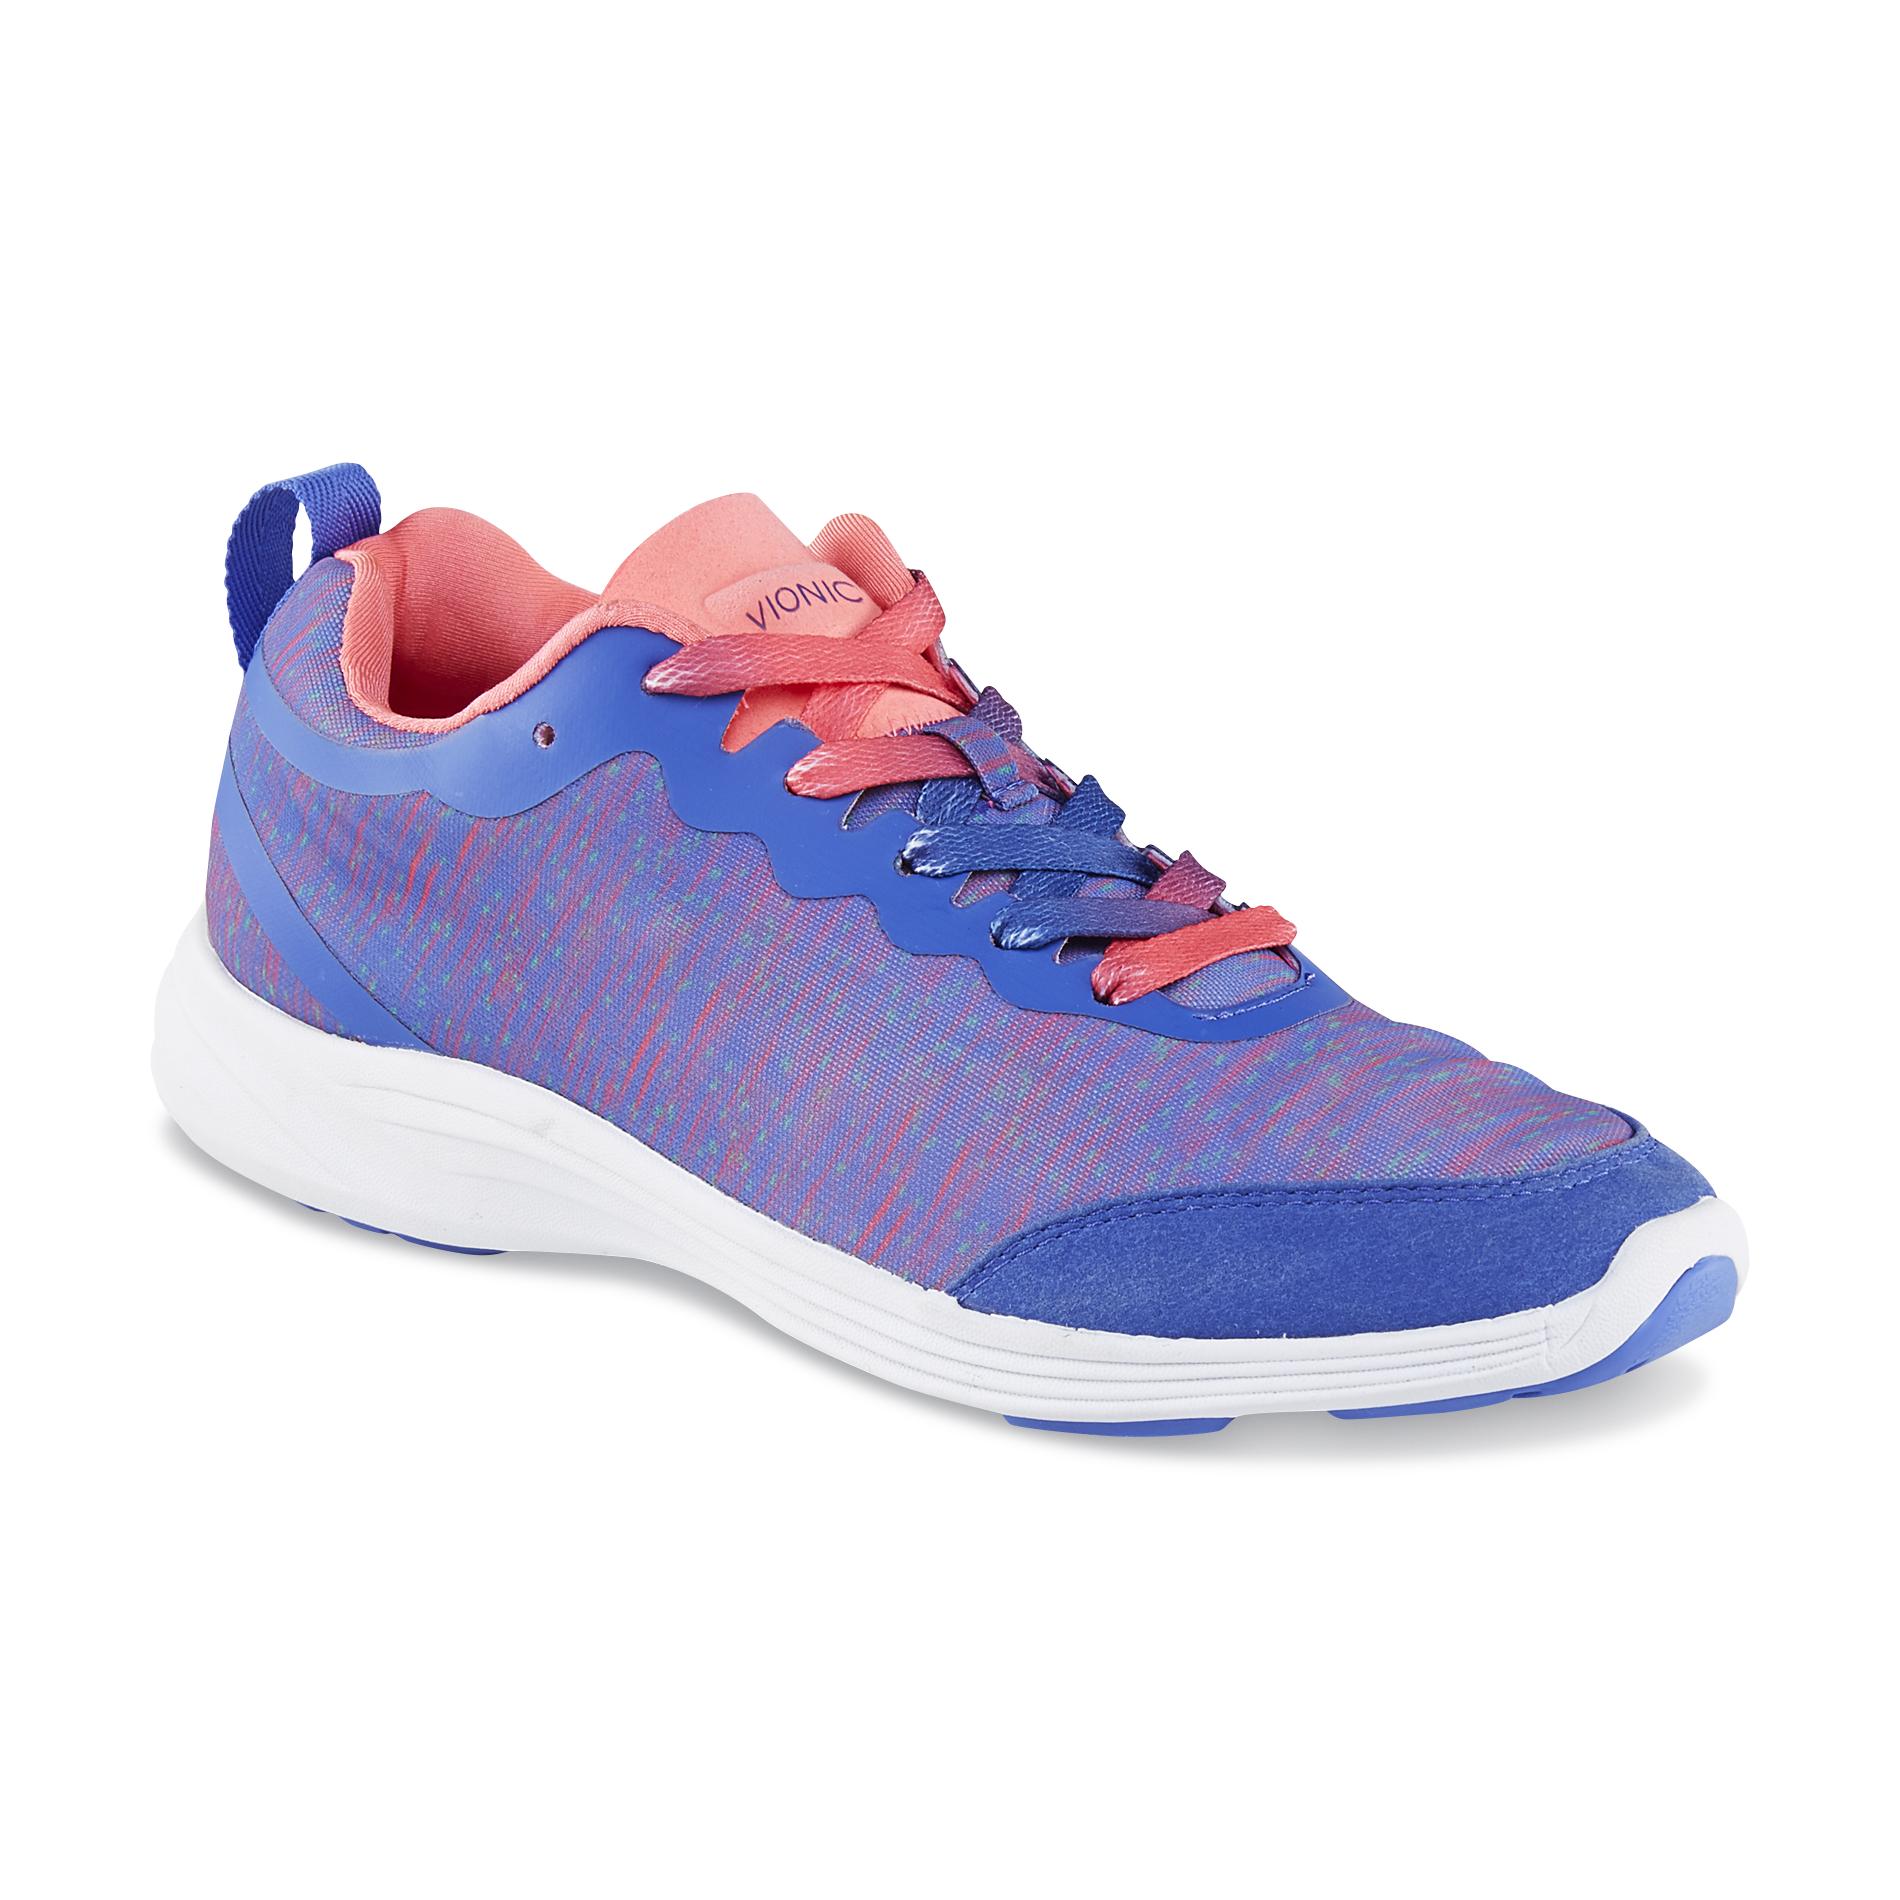 Vionic Women's Fyn Athletic Shoe - Blue/Coral